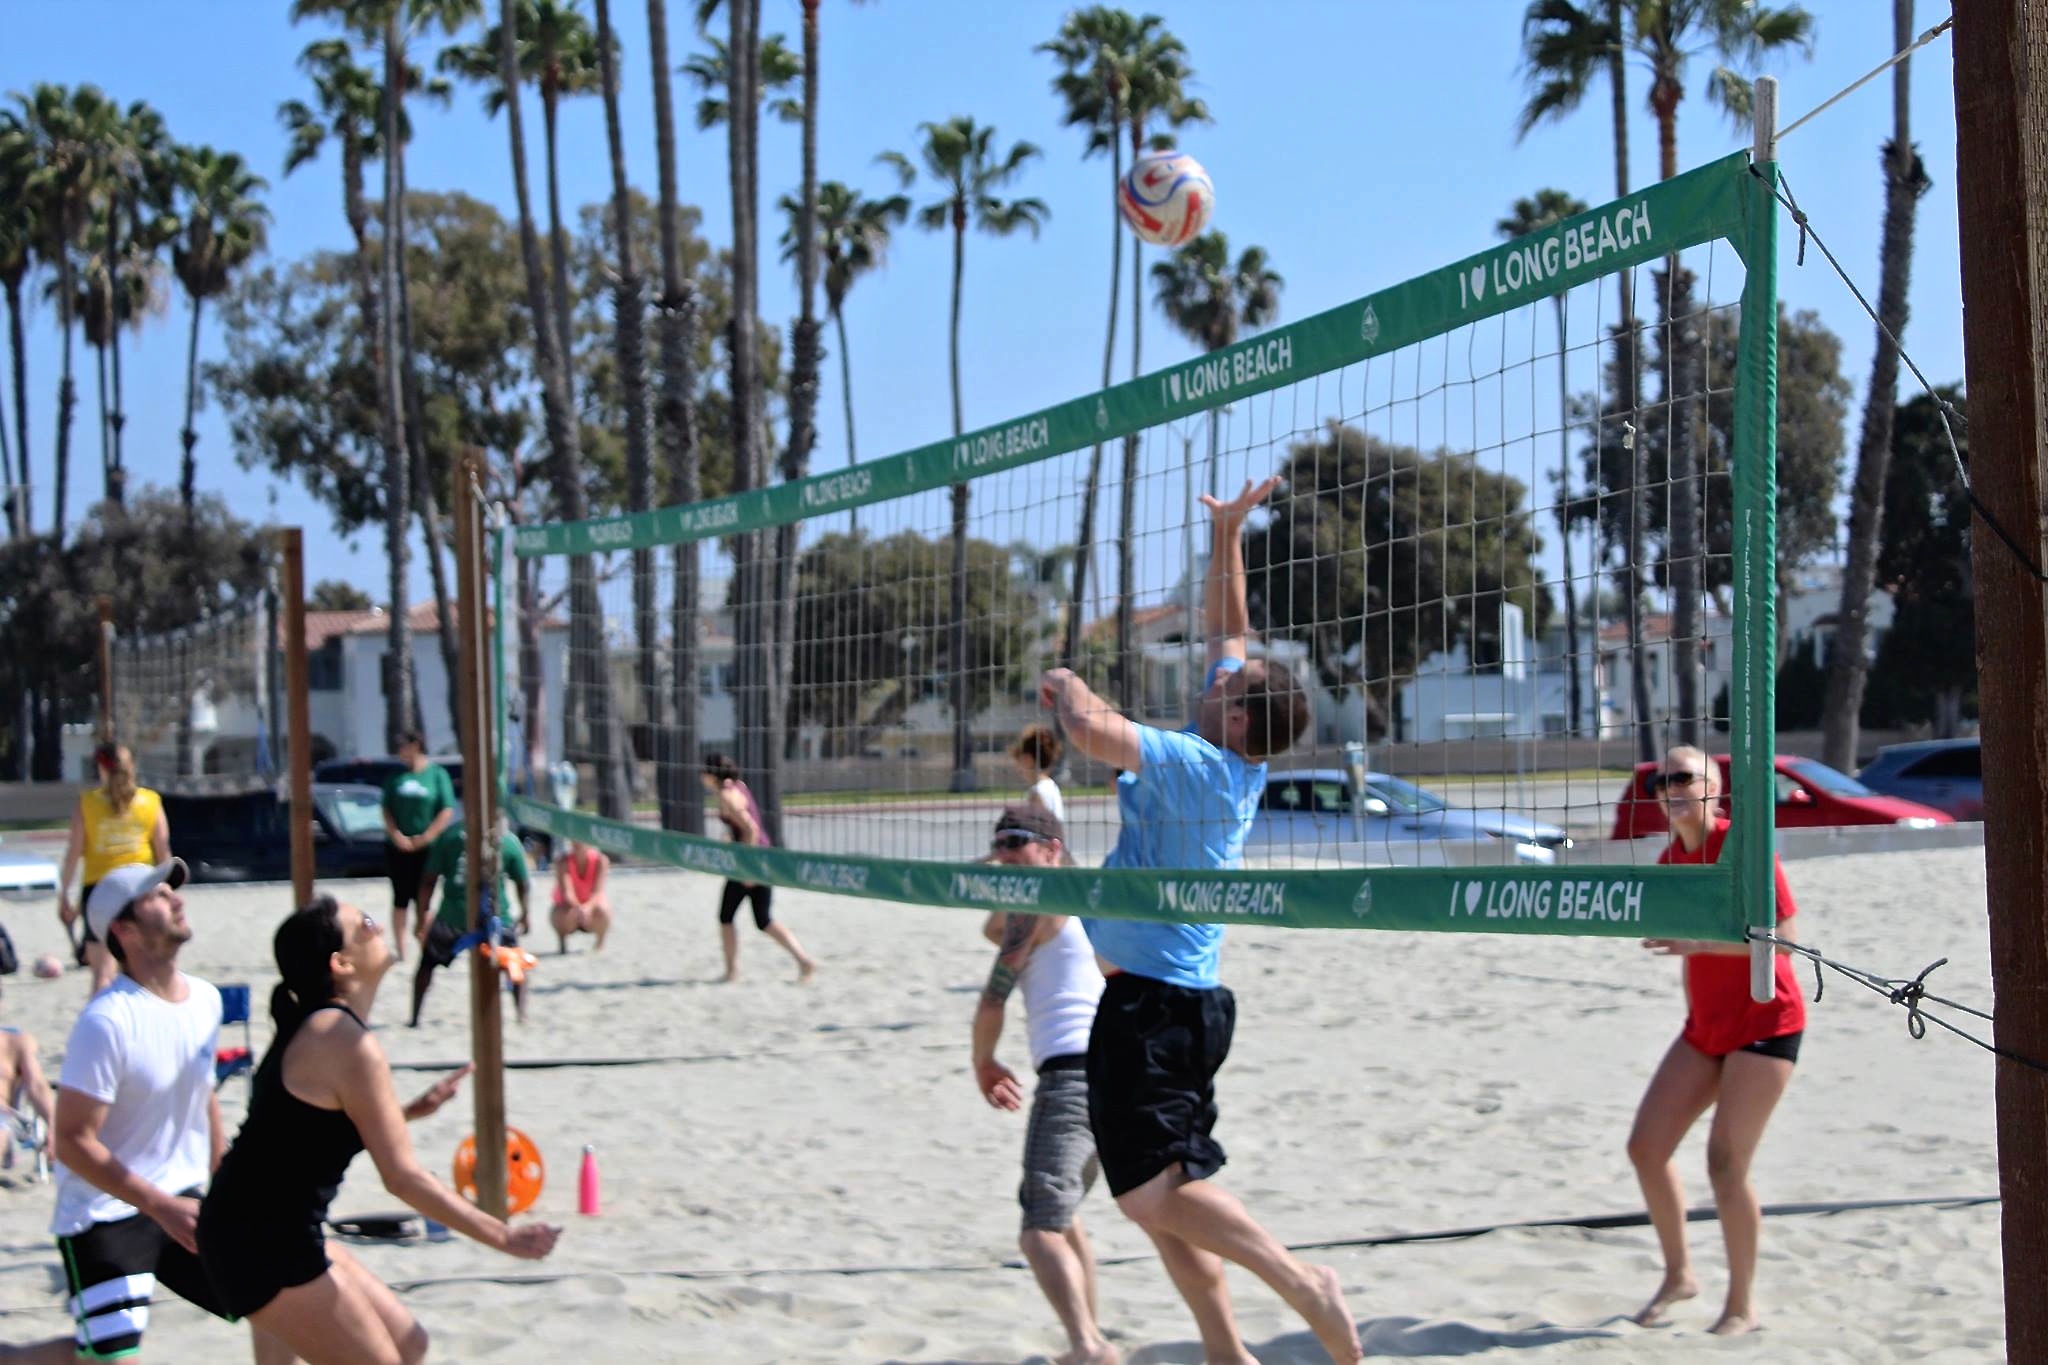 Coed 4s Beach Volleyball Tournament Love Long Beach Festival 2016 7742